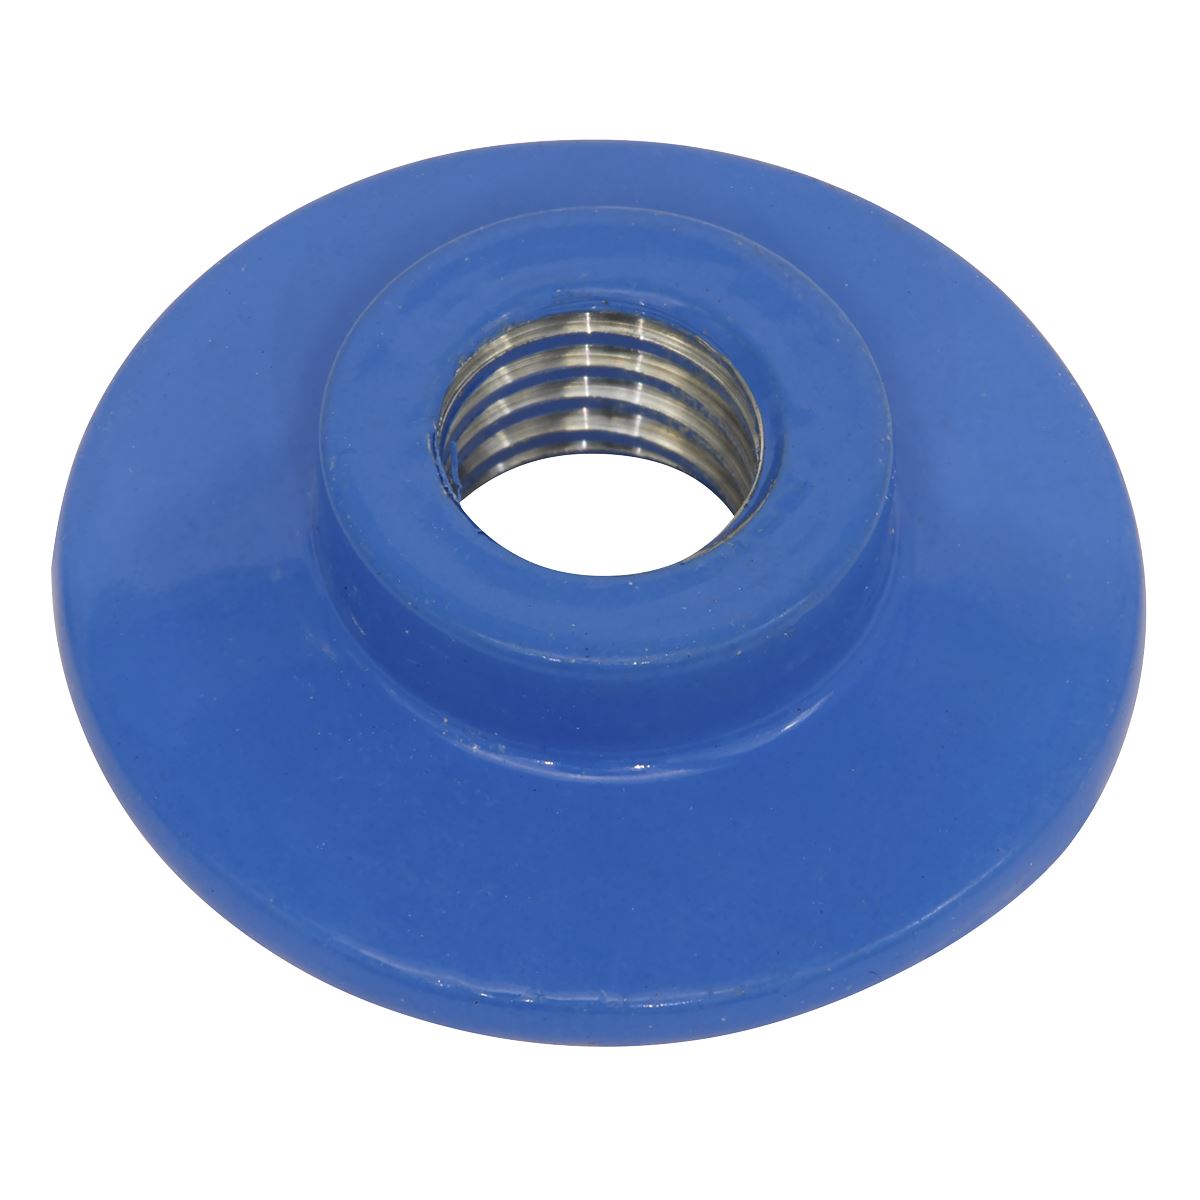 Sealey Lock Nut for PTC/BP3 Backing Pad M10 x 1.5mm